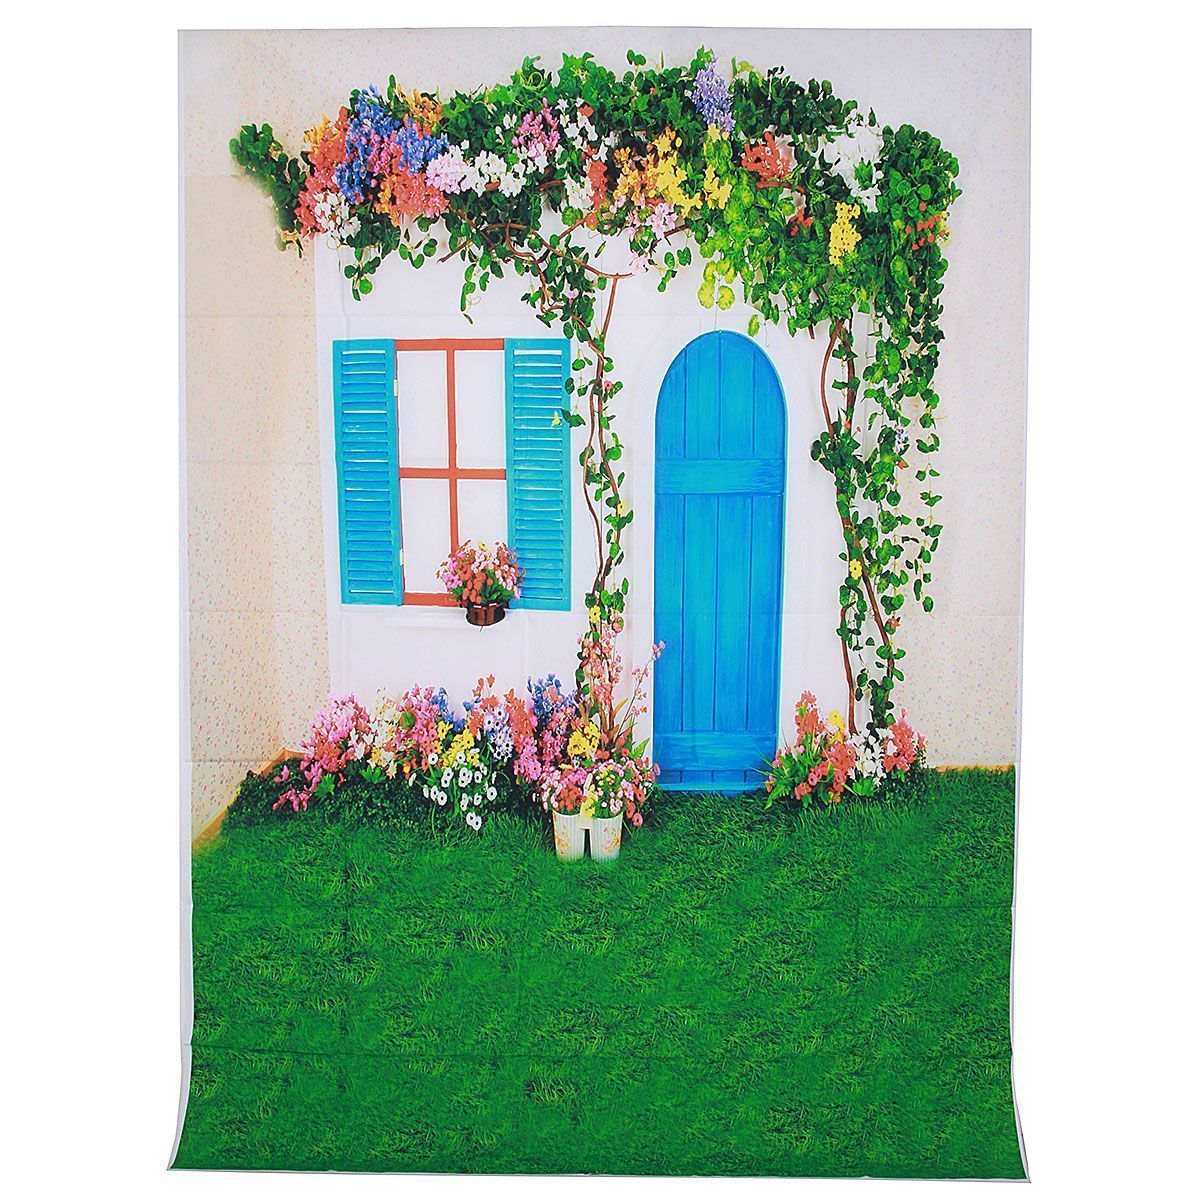 5x7FT-Vinyl-Spring-House-Garden-Photography-Backdrop-Background-Studio-Prop-1387982